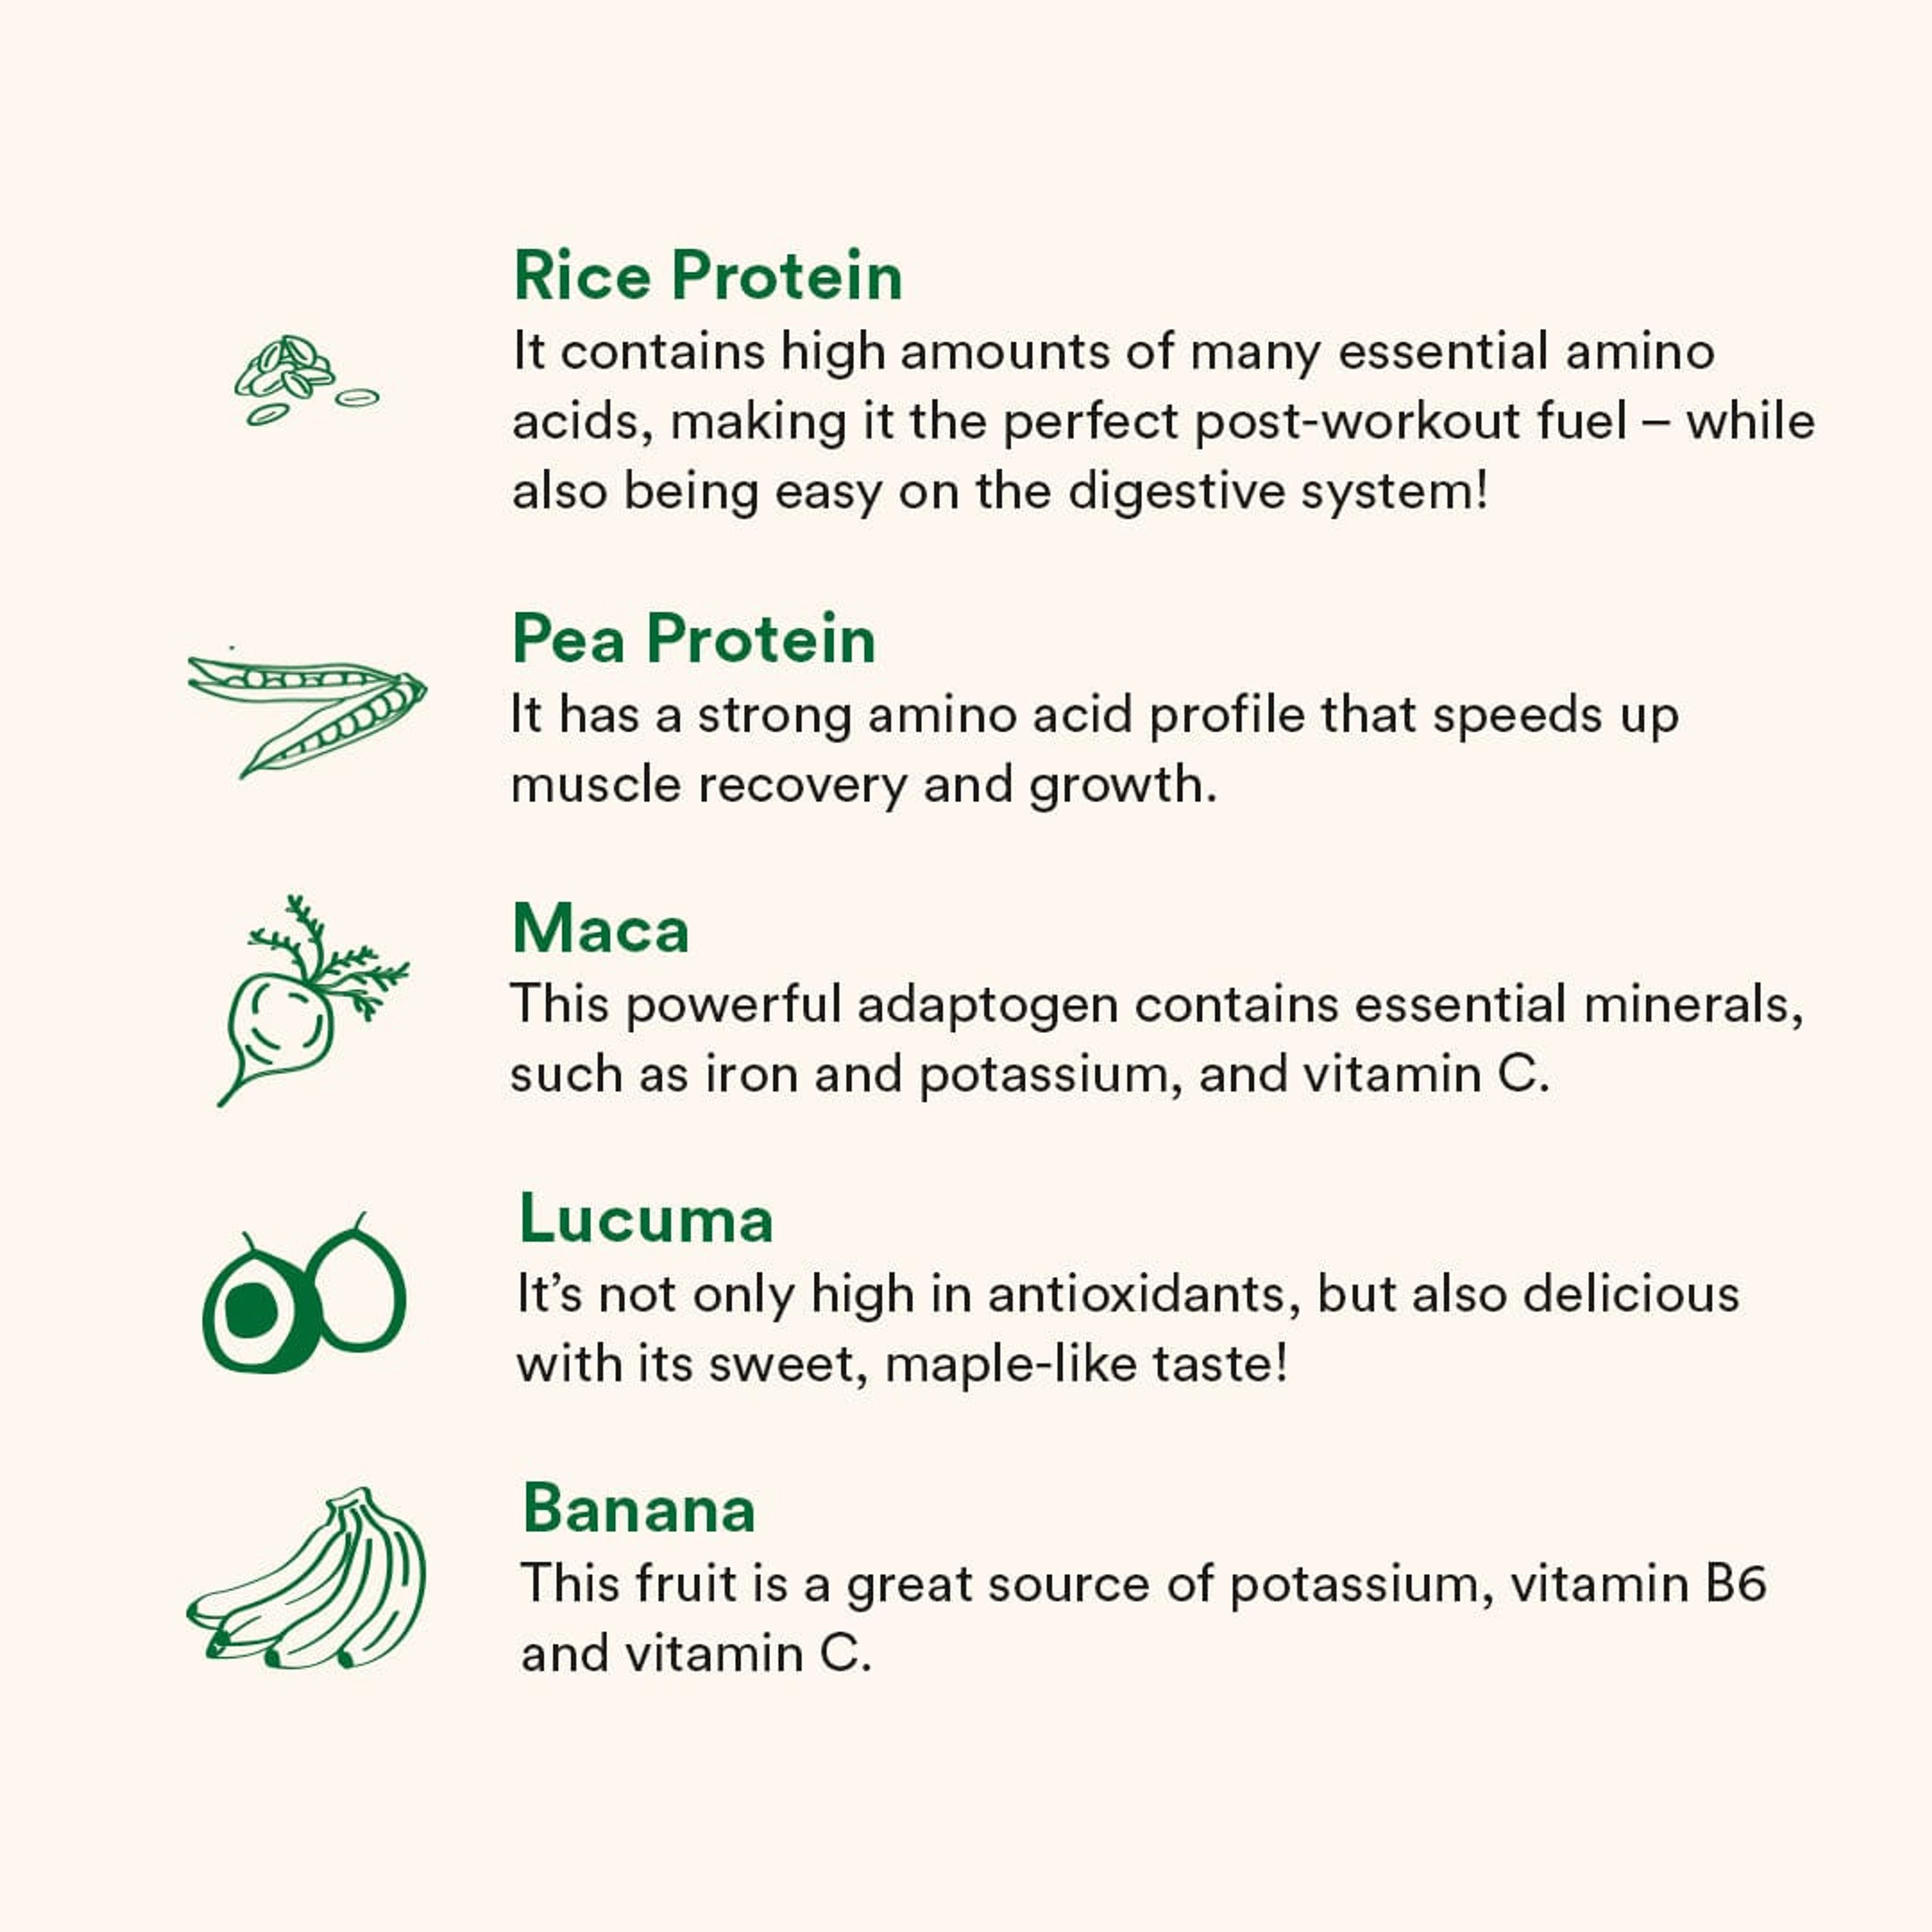 Plant Protein (Build Your Own Bundle)